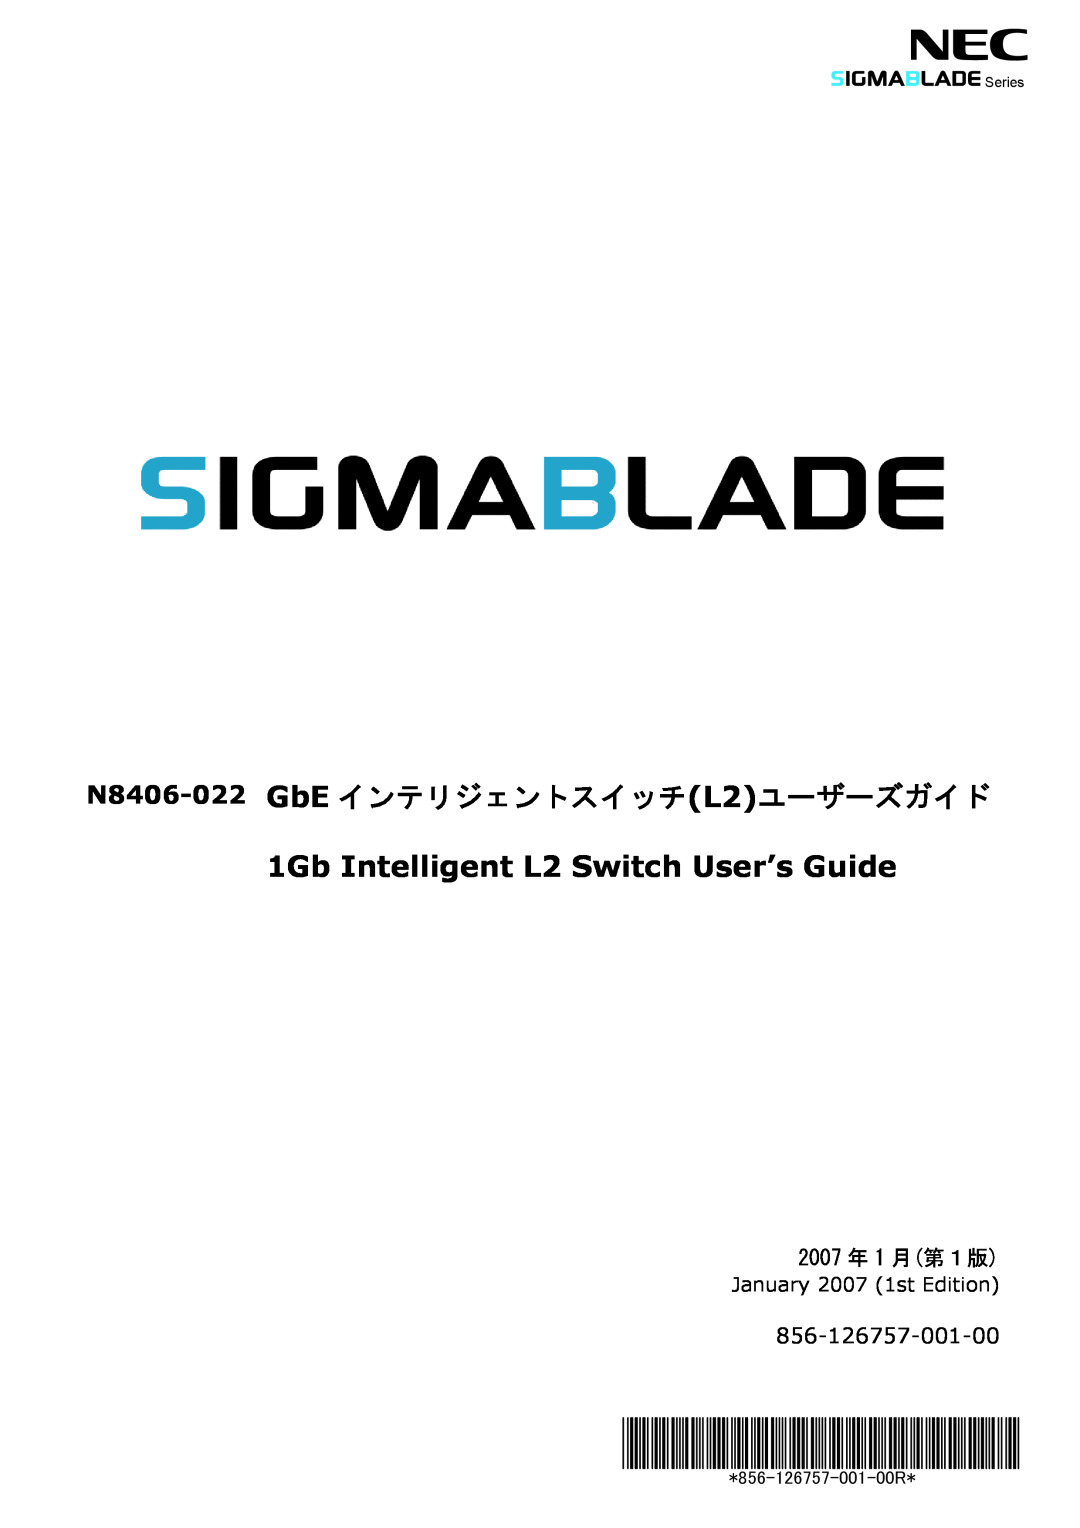 NEC manual 1Gb Intelligent L2 Switch User’s Guide, N8406-022 GbE インテリジェントスイッチL2ユーザーズガイド, 2007 年 1 月第１版 